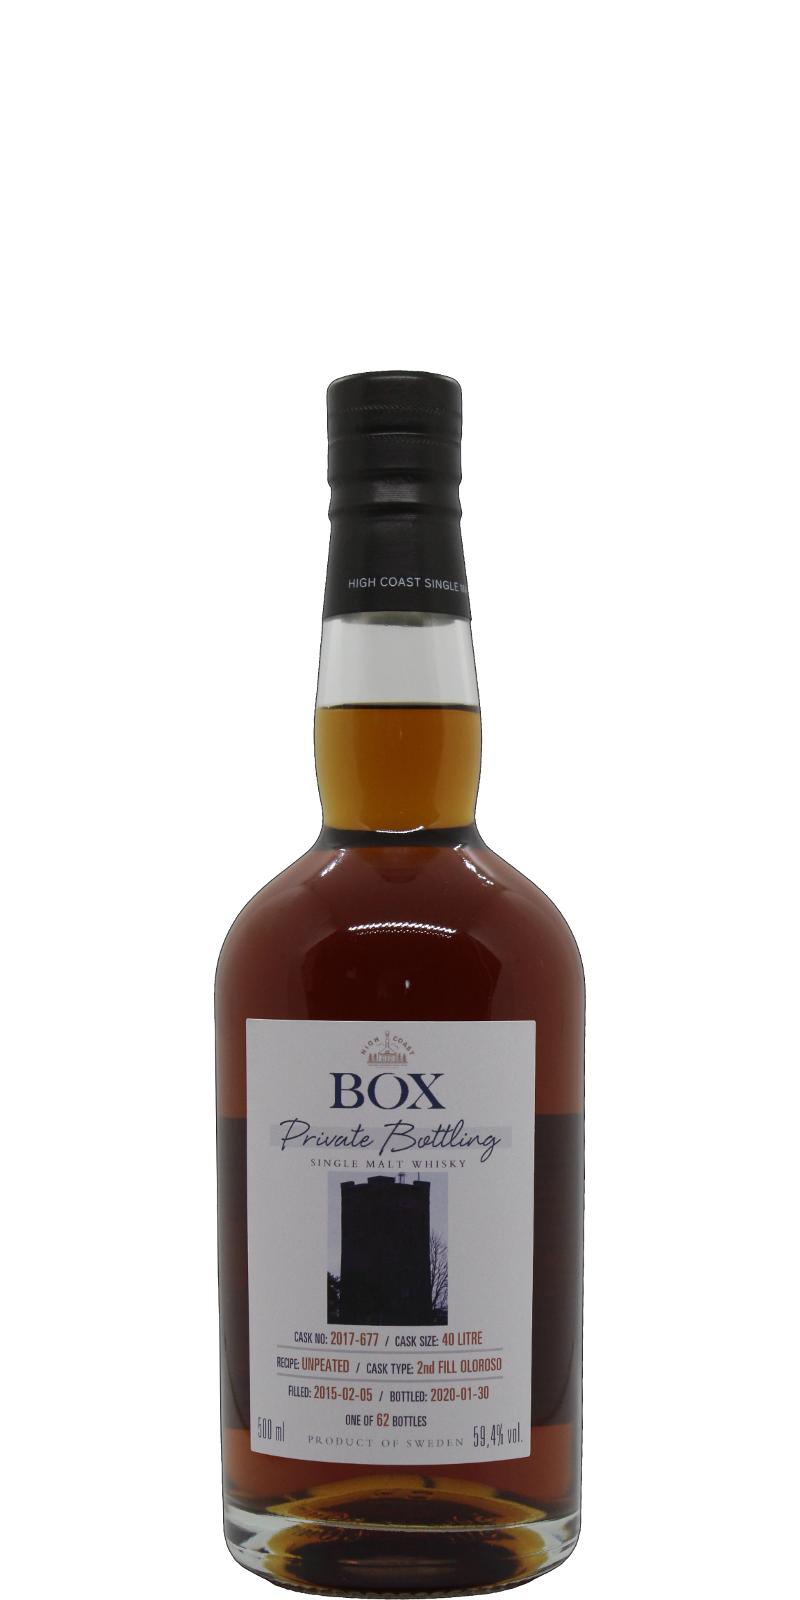 Box 2015 WSla Private Bottling 2nd fill Oloroso 2017-677 59.4% 500ml